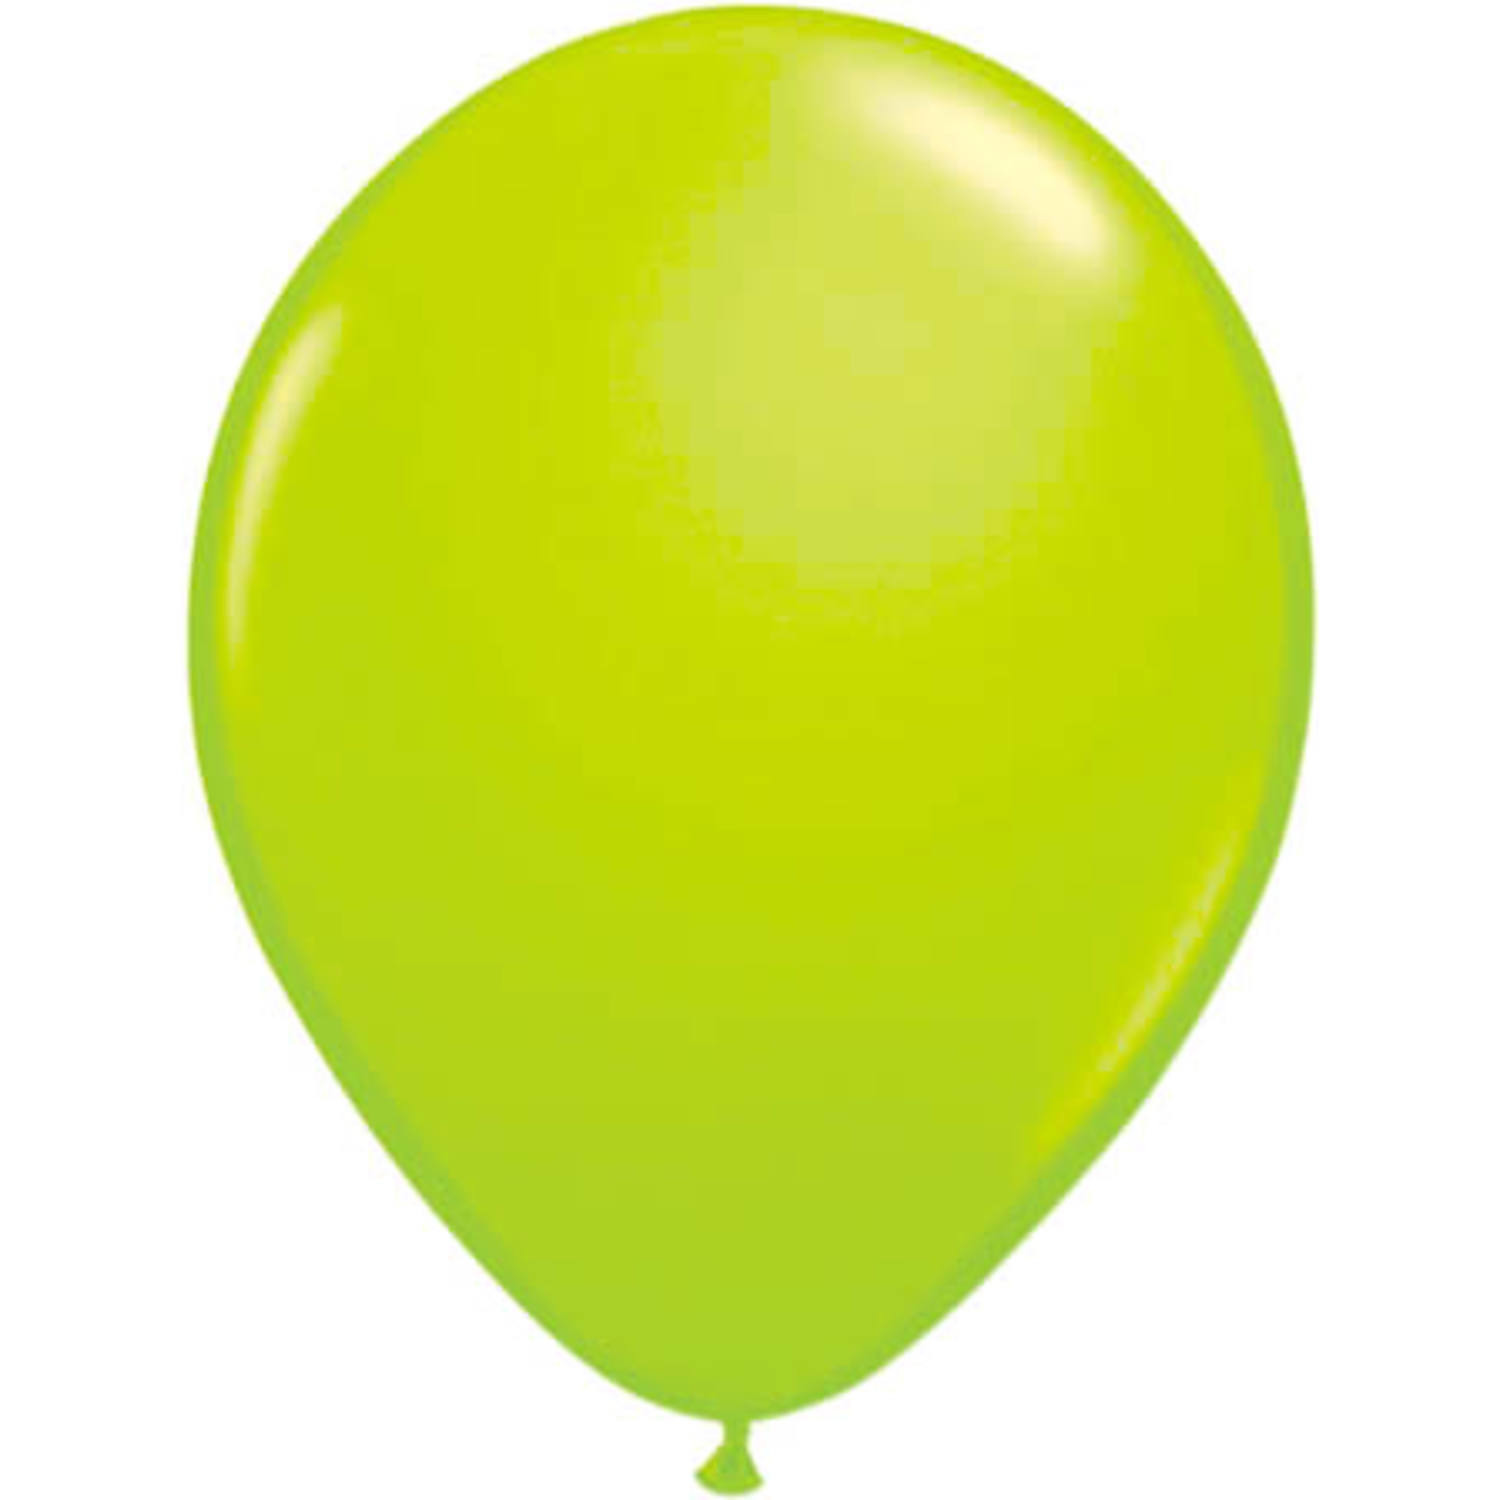 8x stuks Neon fel groene latex ballonnen 25 cm